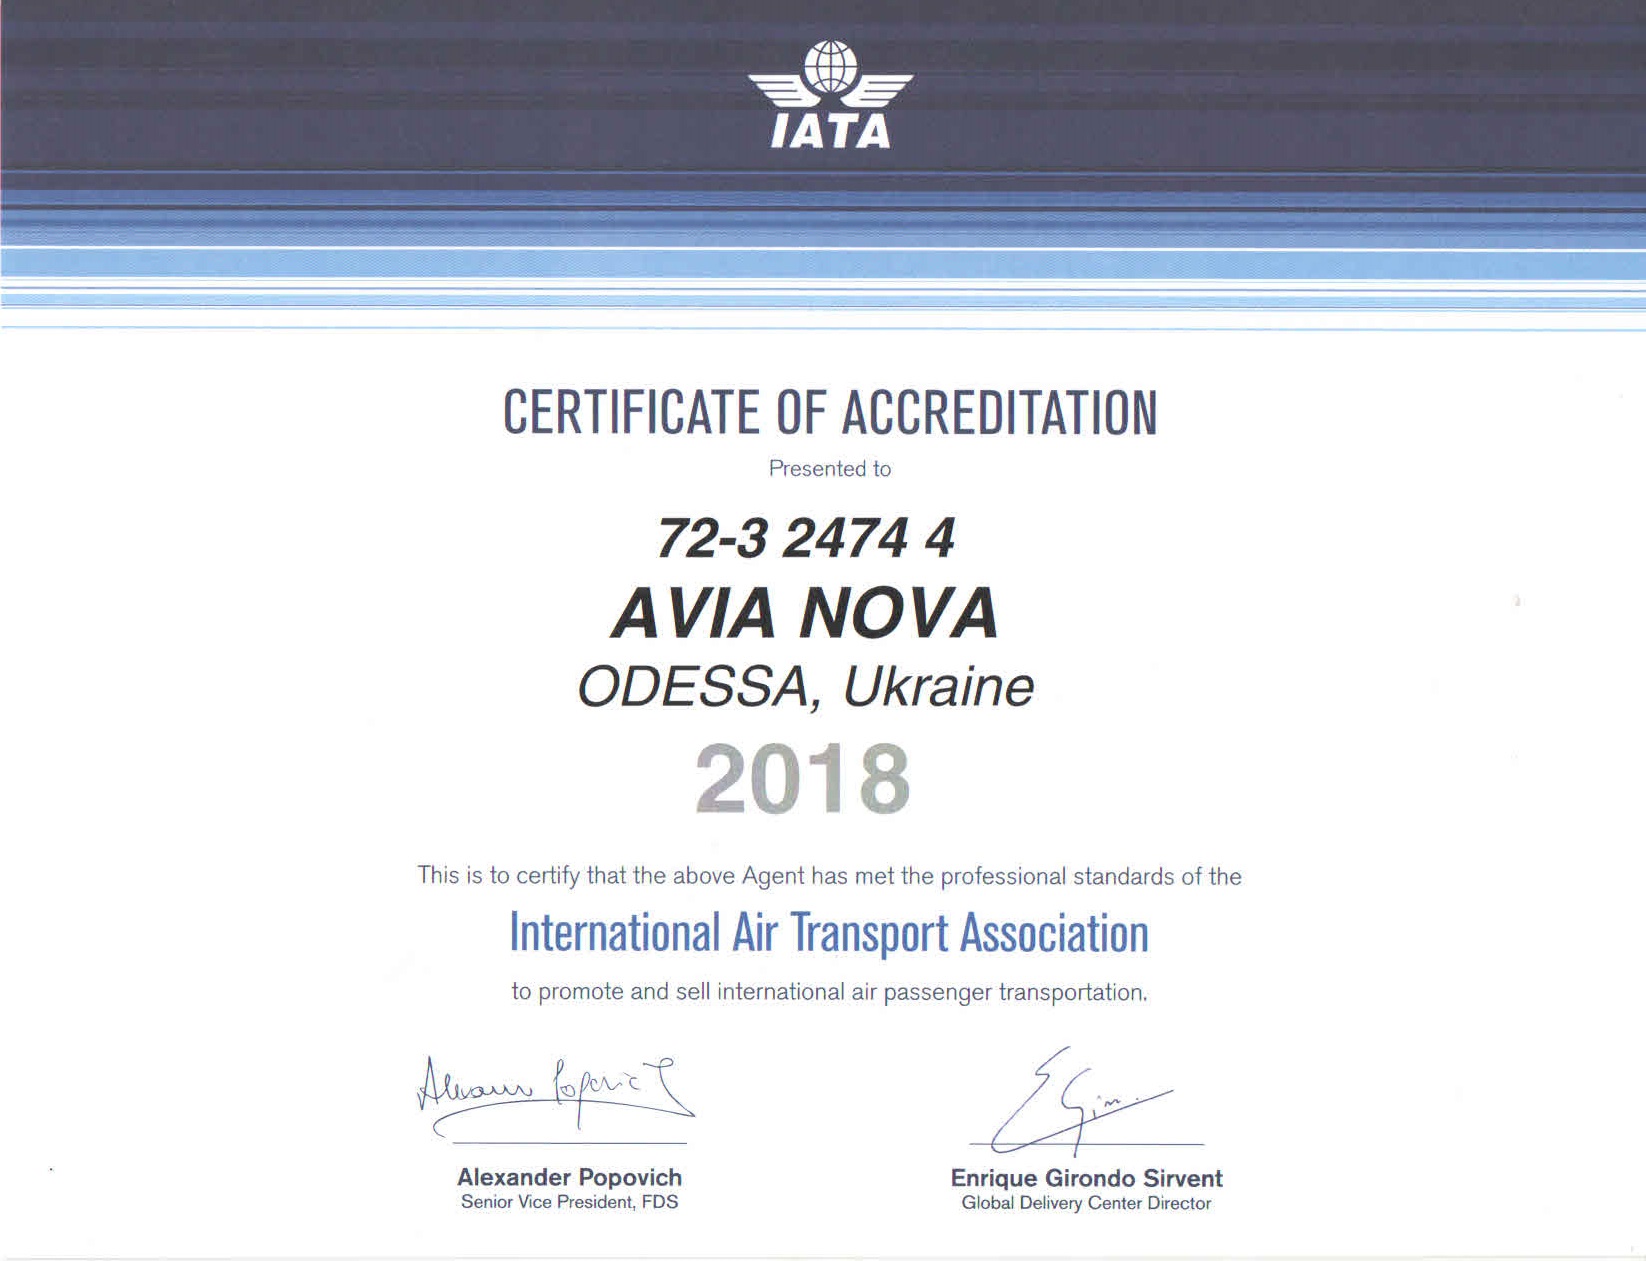 AviaNova IATA certificate